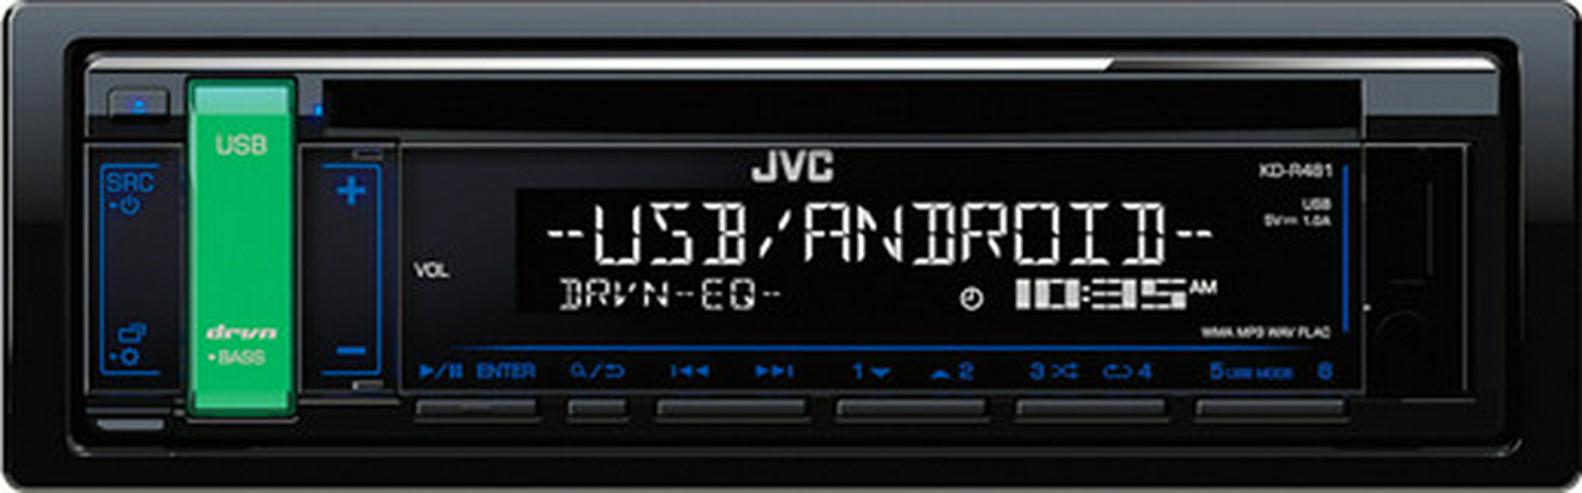 JVC KD-R481 MP3-Tuner USB Autoradio - Autoradios, Player & Wechsler - Bild 1